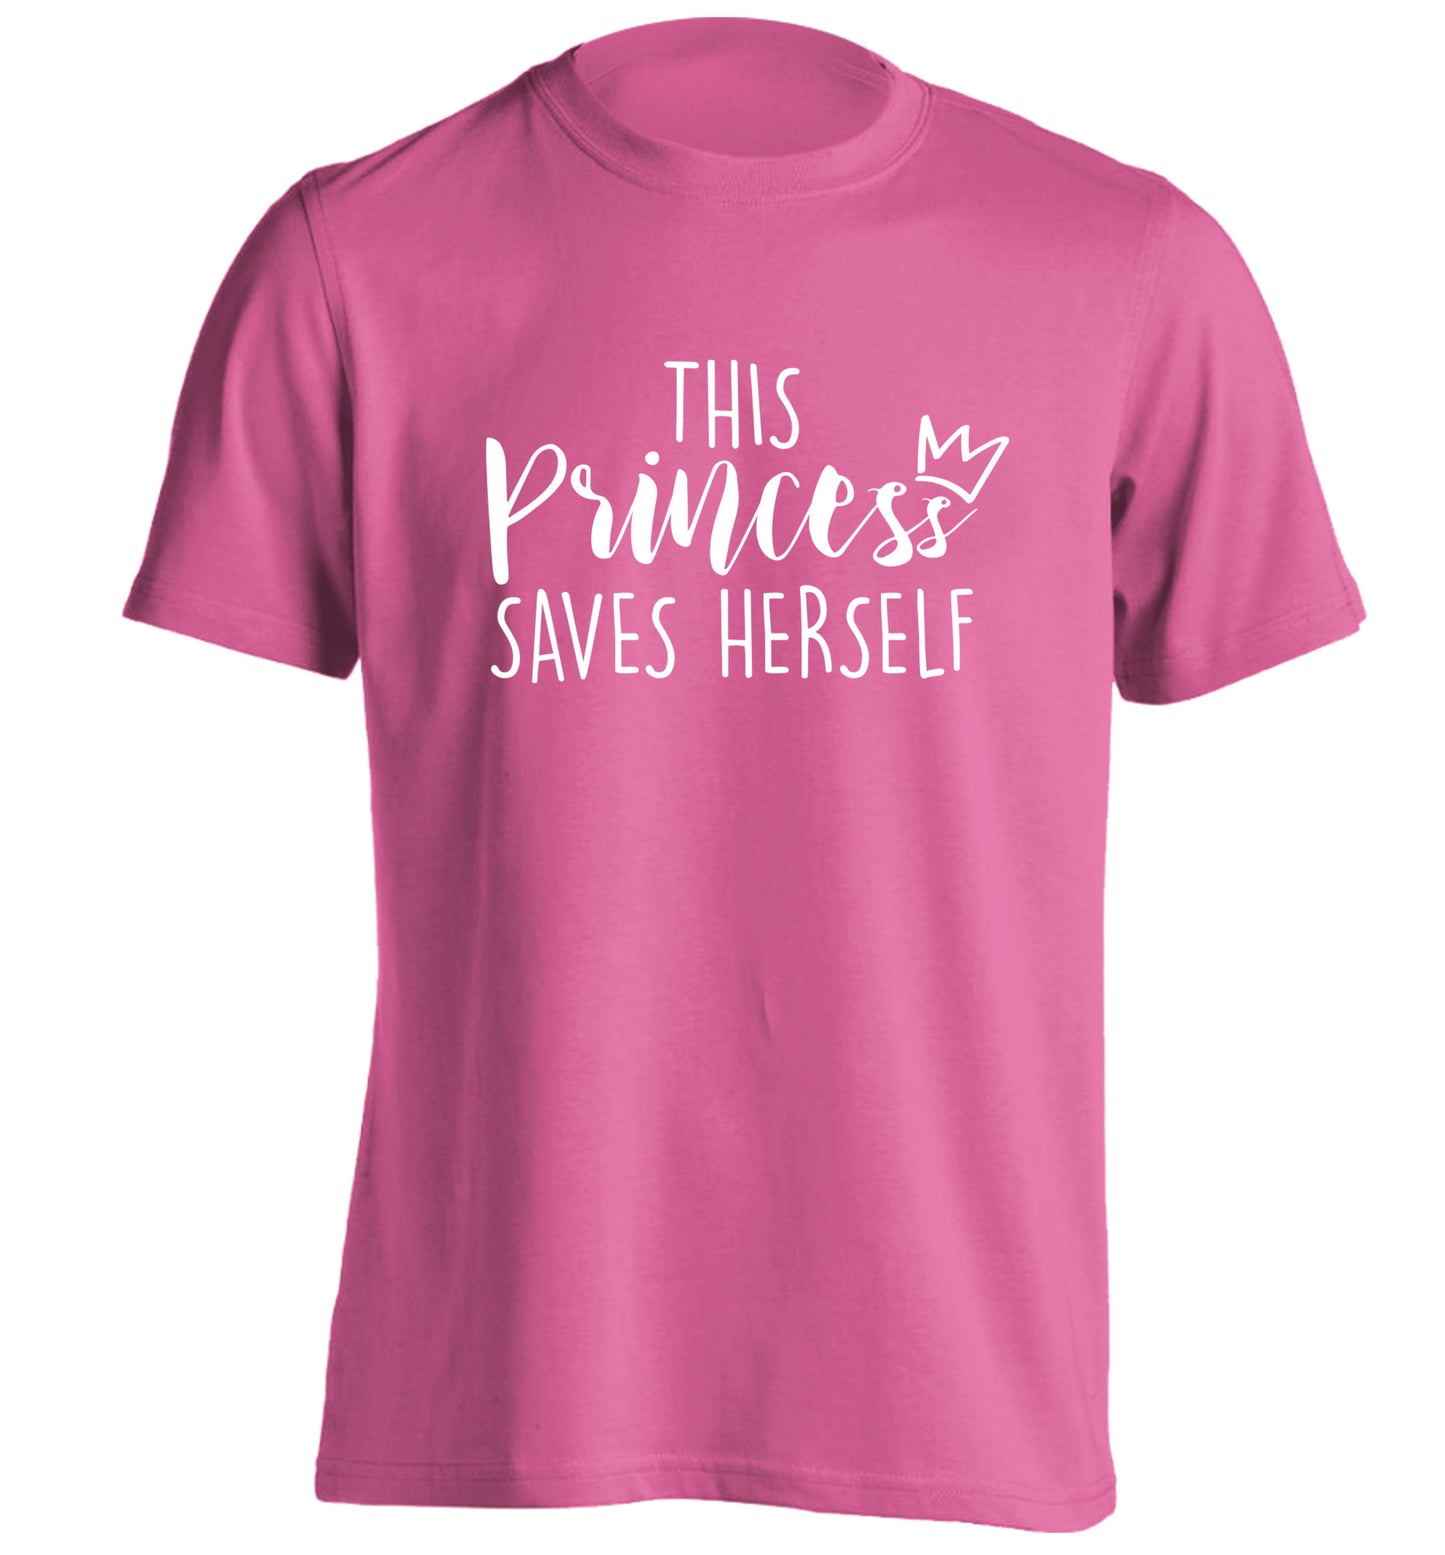 This princess saves herself adults unisex pink Tshirt 2XL